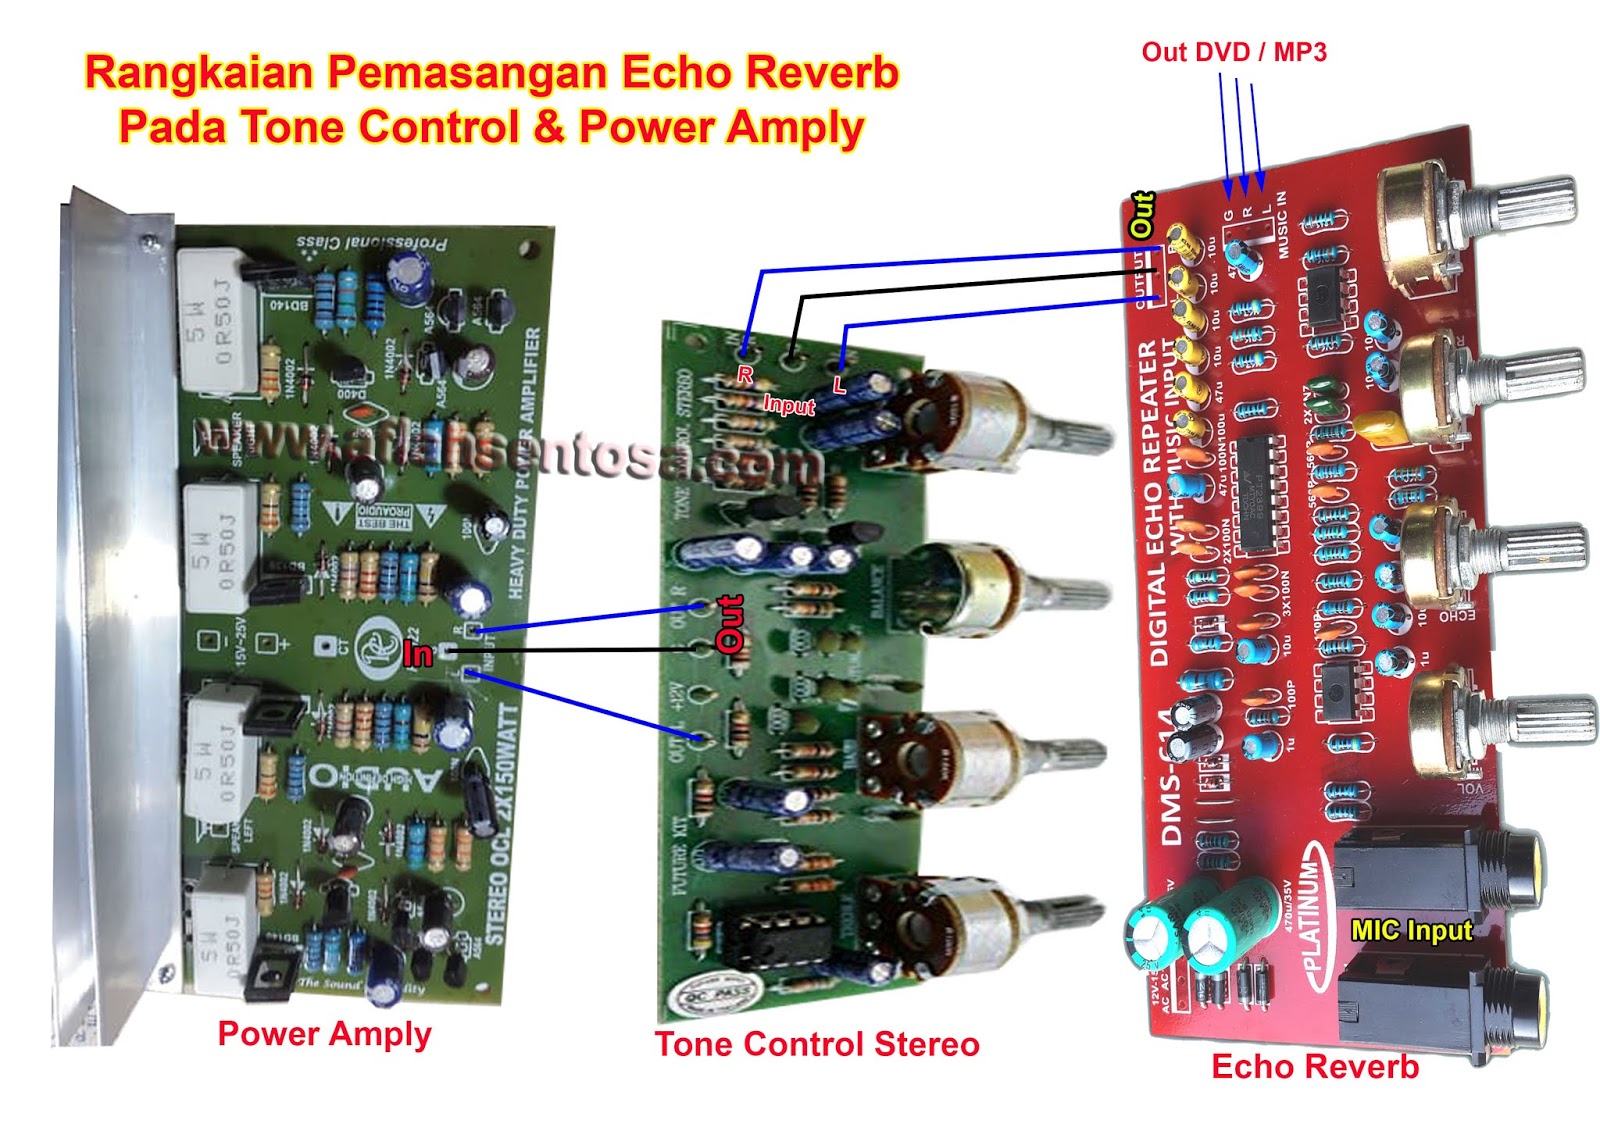 Cara Memasang Echo Reverb Pada Tone Control Dan Power Amply - Aflah Sentosa